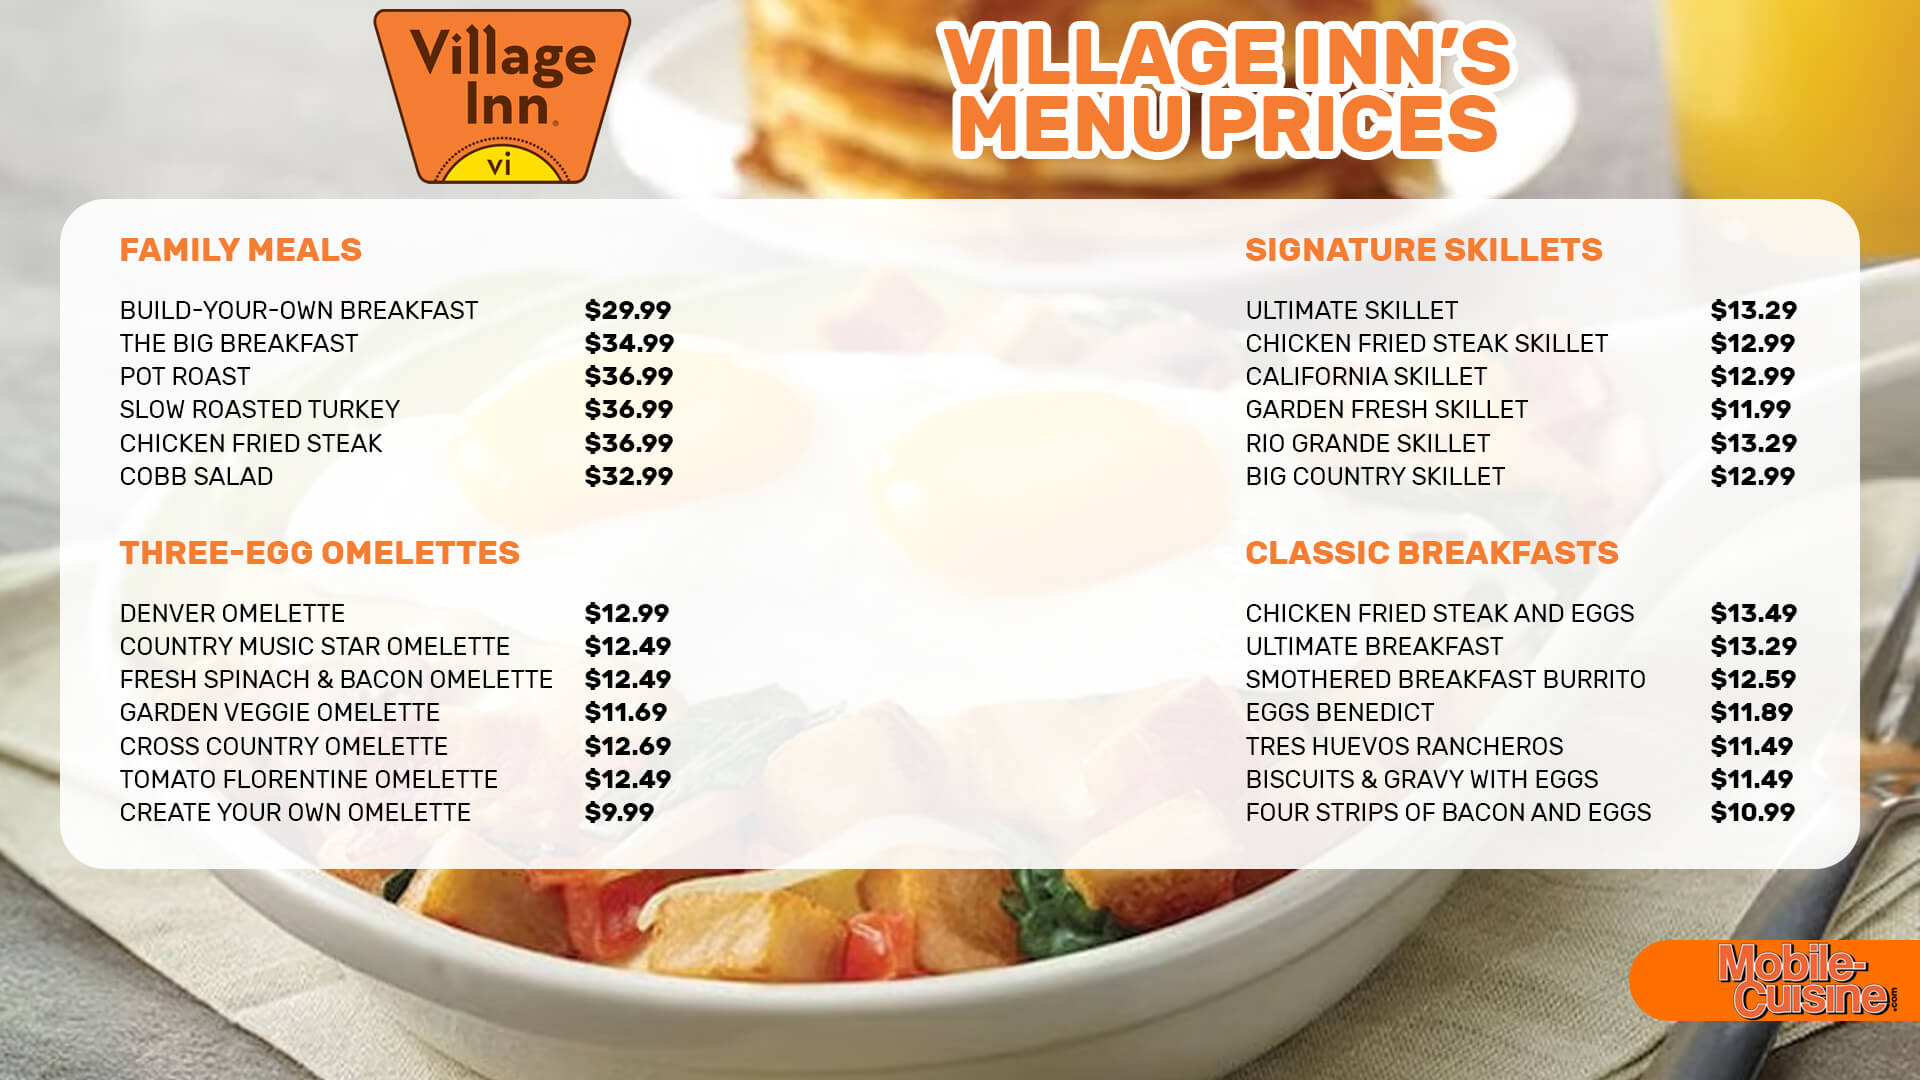 Village Inn menu prices